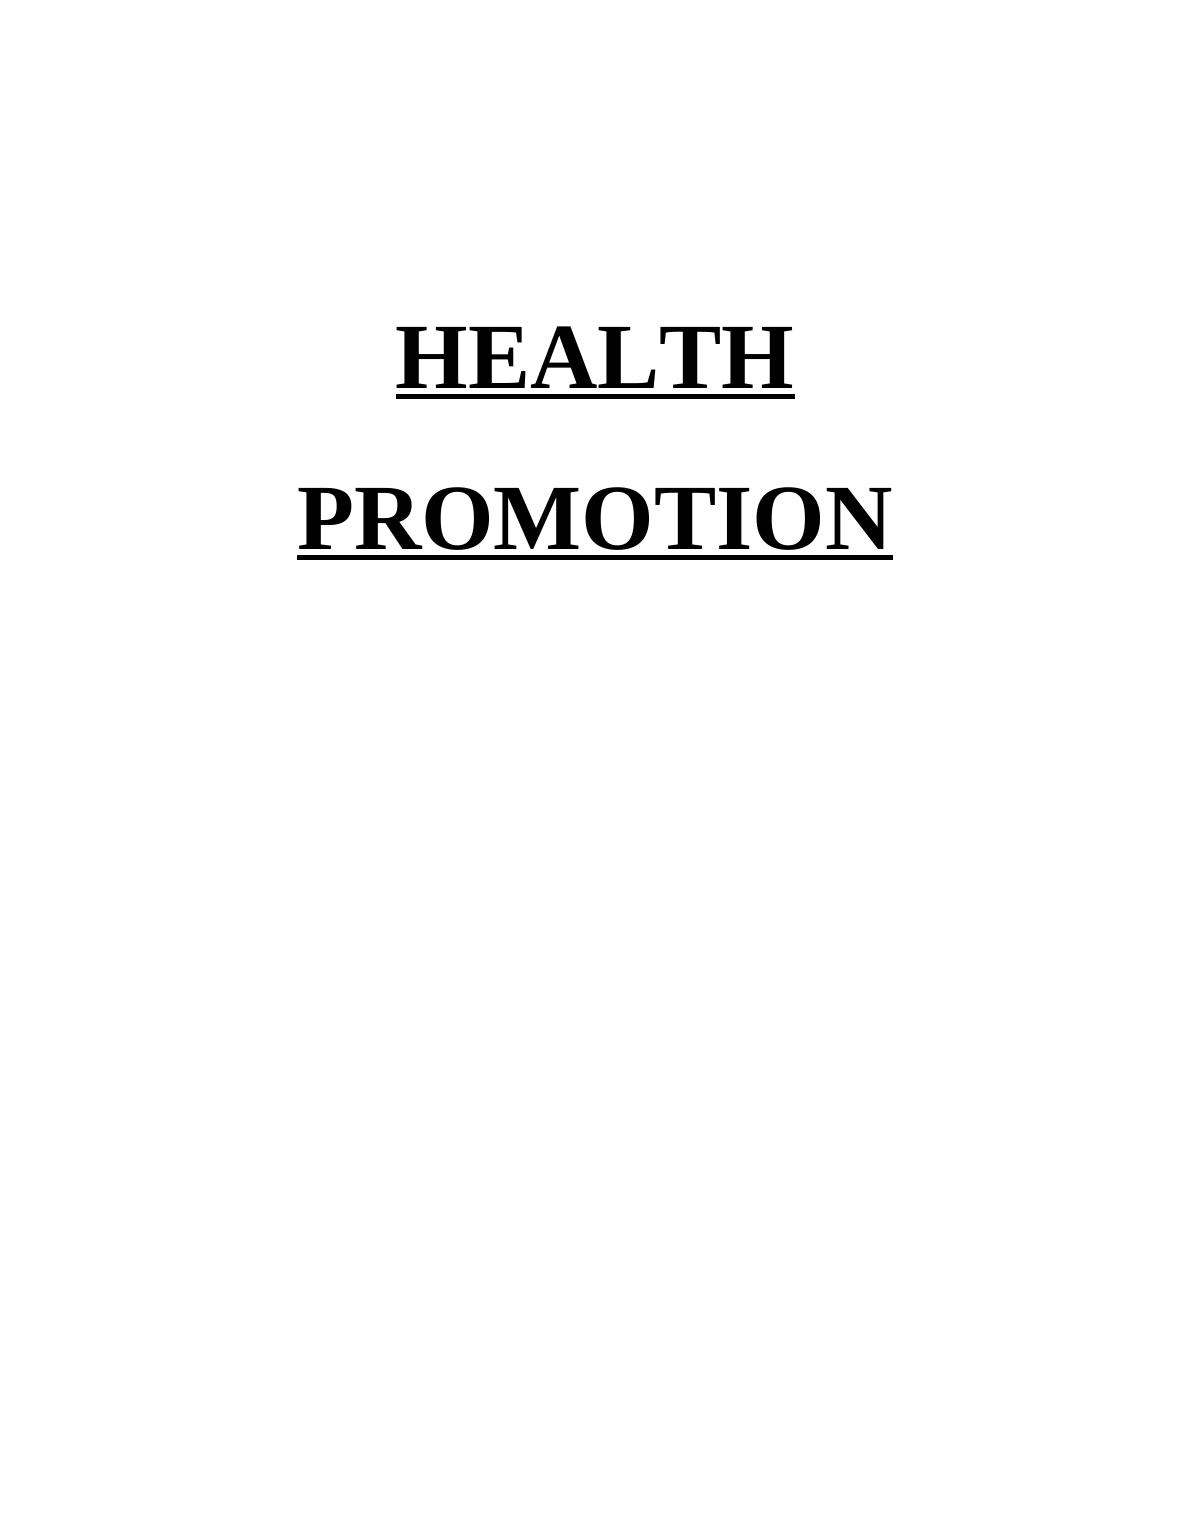 'Determinants of Health Model' by Dahlgren and Whitehead's_1